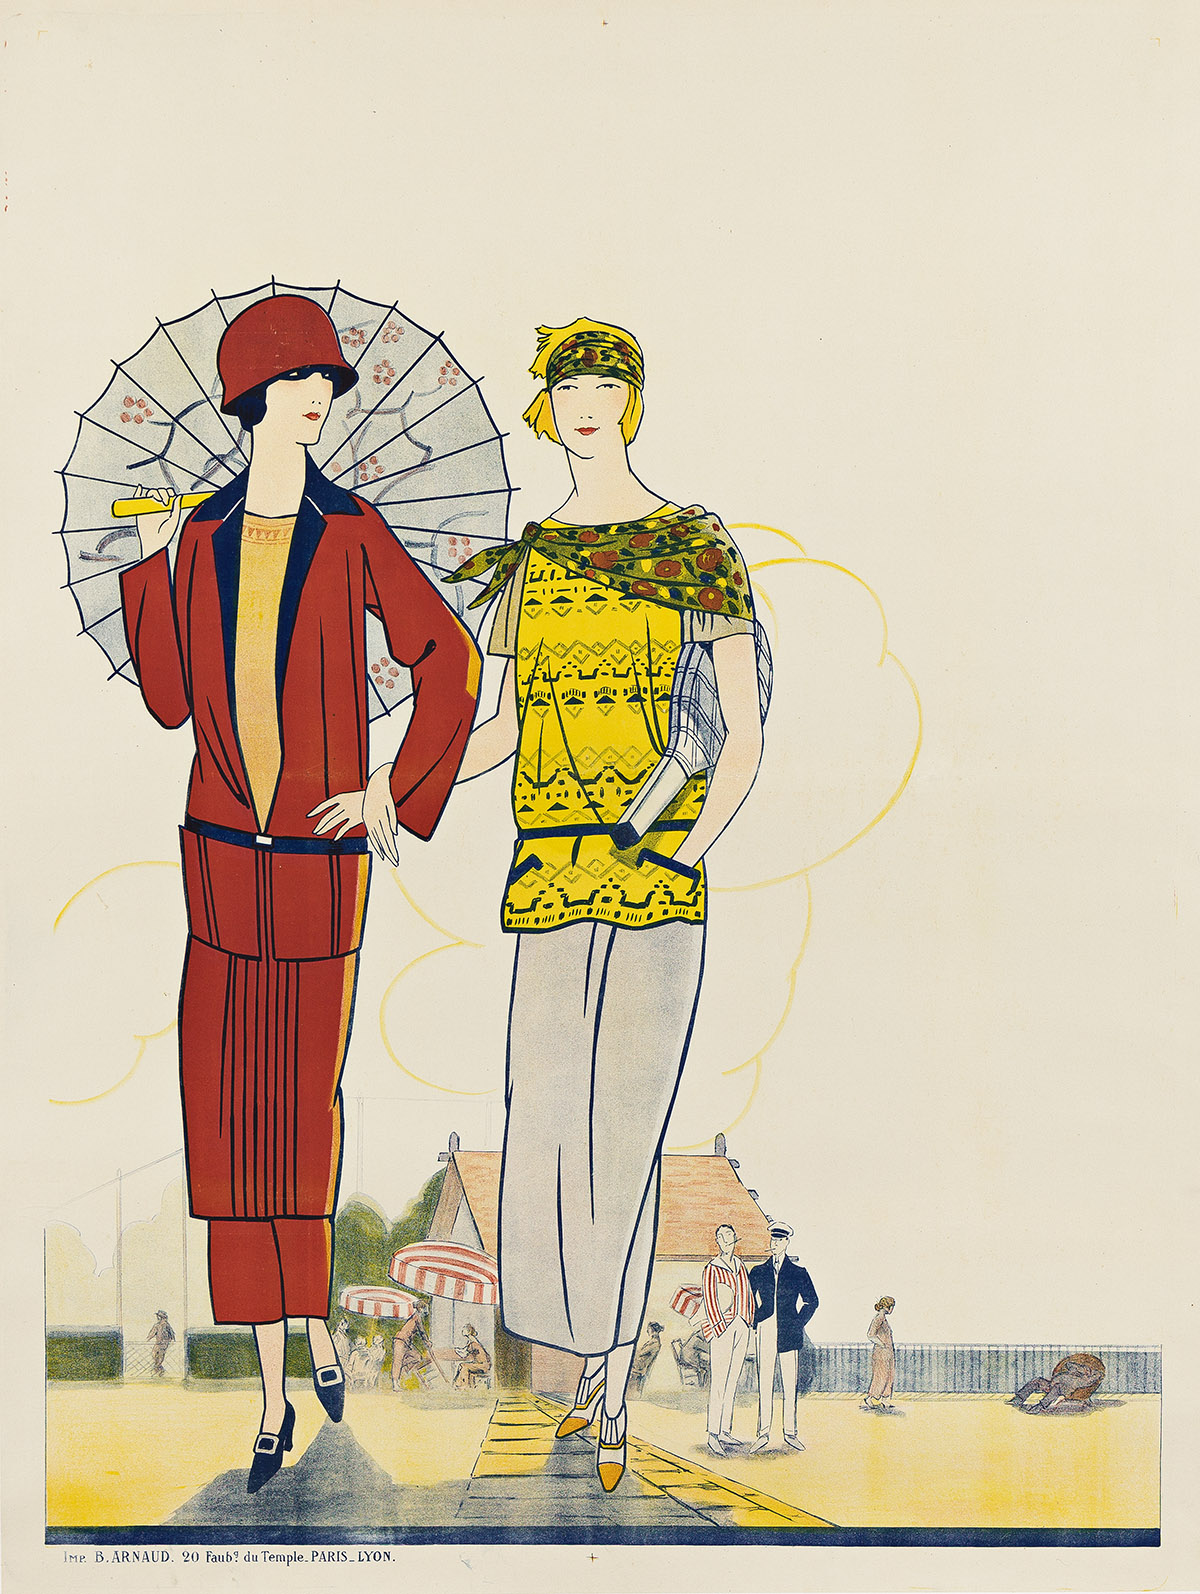 DESIGNER UNKNOWN. [WOMEN WITH PARASOL & TENNIS RACKET]. Circa 1922. 62½x47 inches, 158¾x119½ cm. B. Arnaud, Paris.